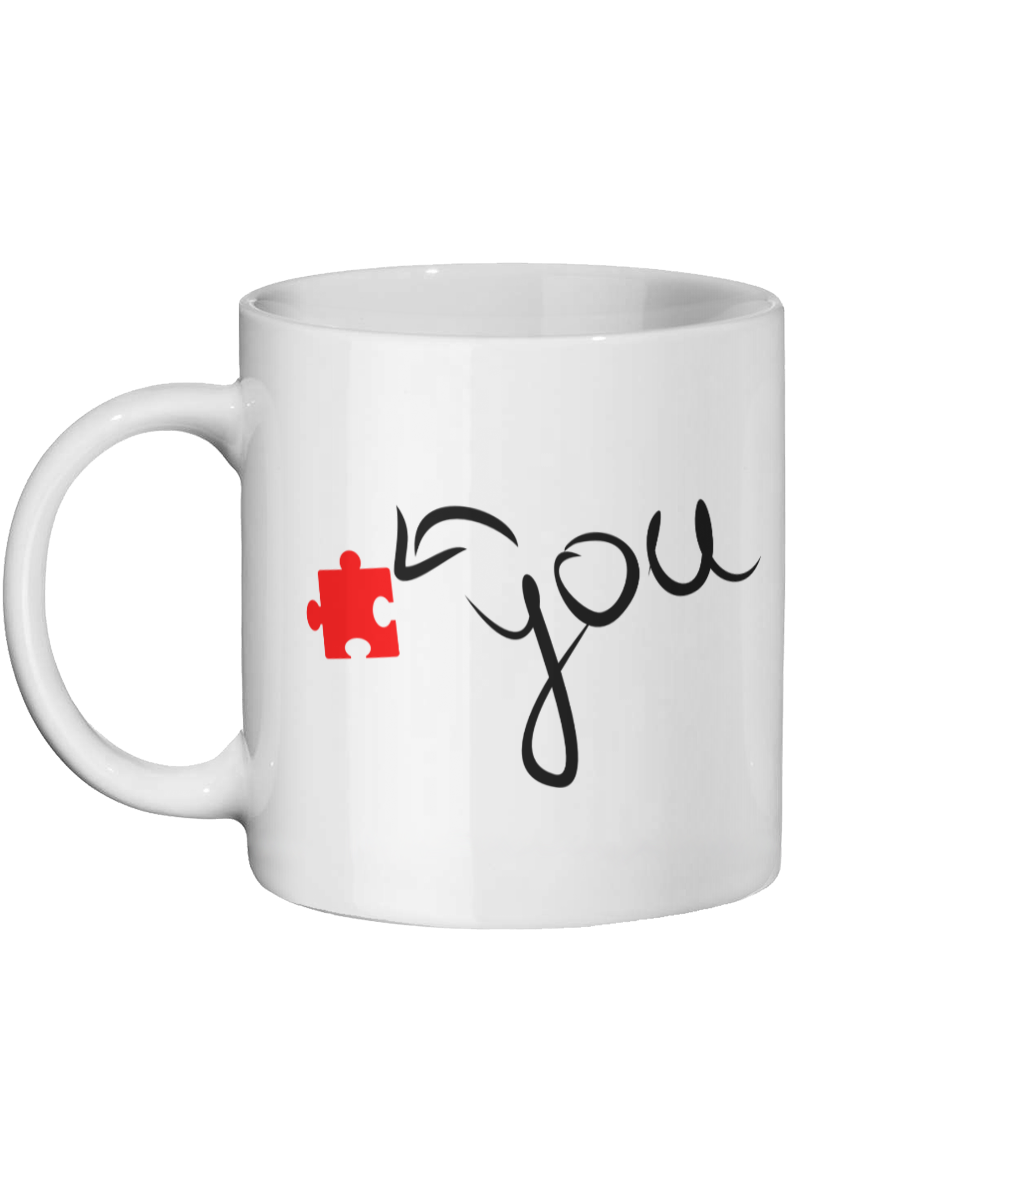 YOU. Mug - novelt-ies- Mugs & Drinkware